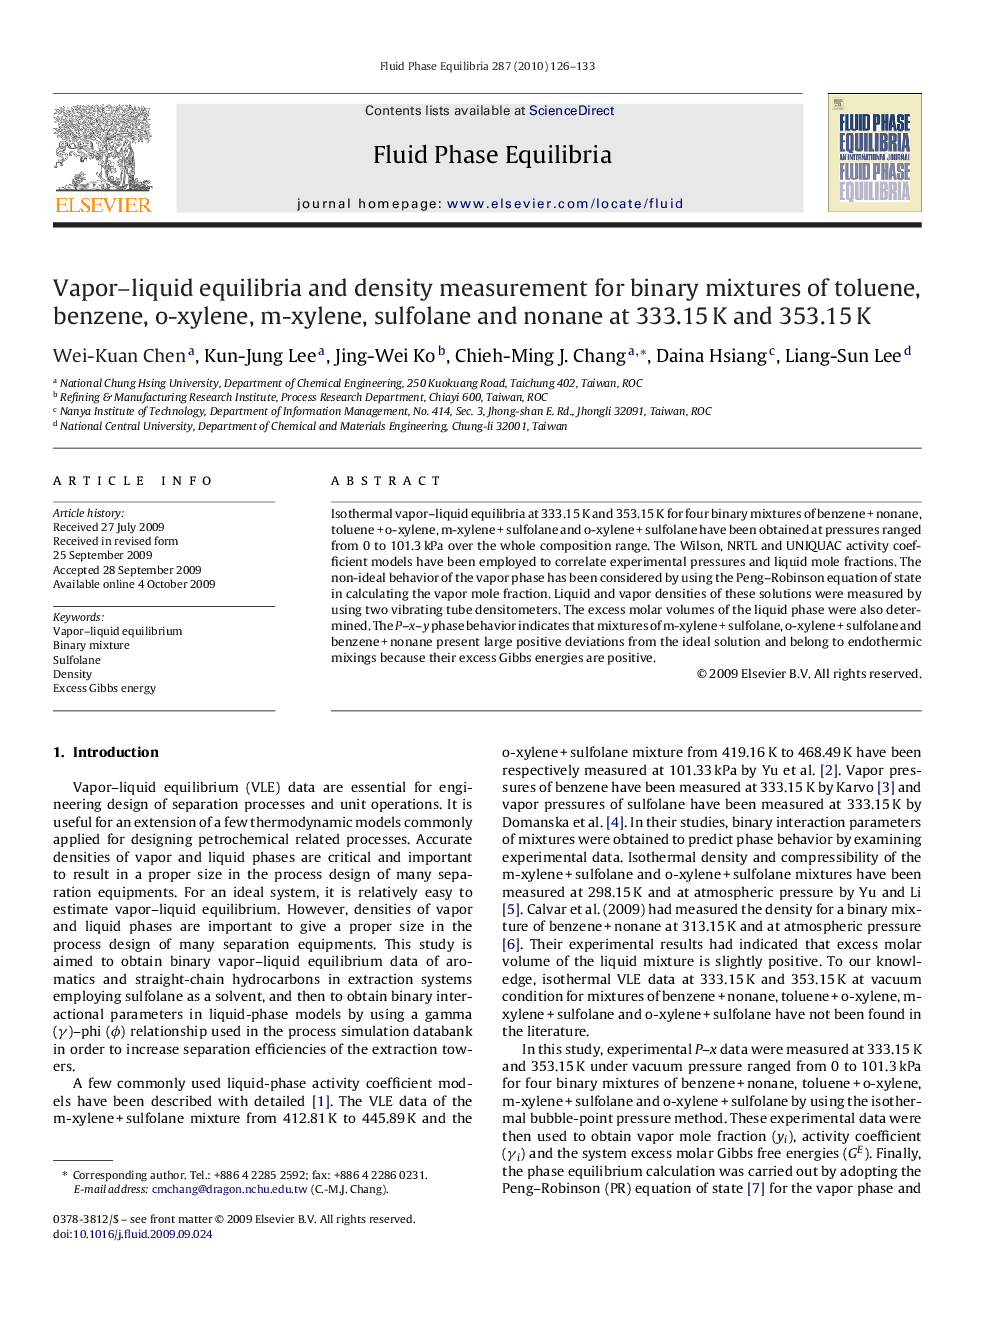 Vapor–liquid equilibria and density measurement for binary mixtures of toluene, benzene, o-xylene, m-xylene, sulfolane and nonane at 333.15 K and 353.15 K